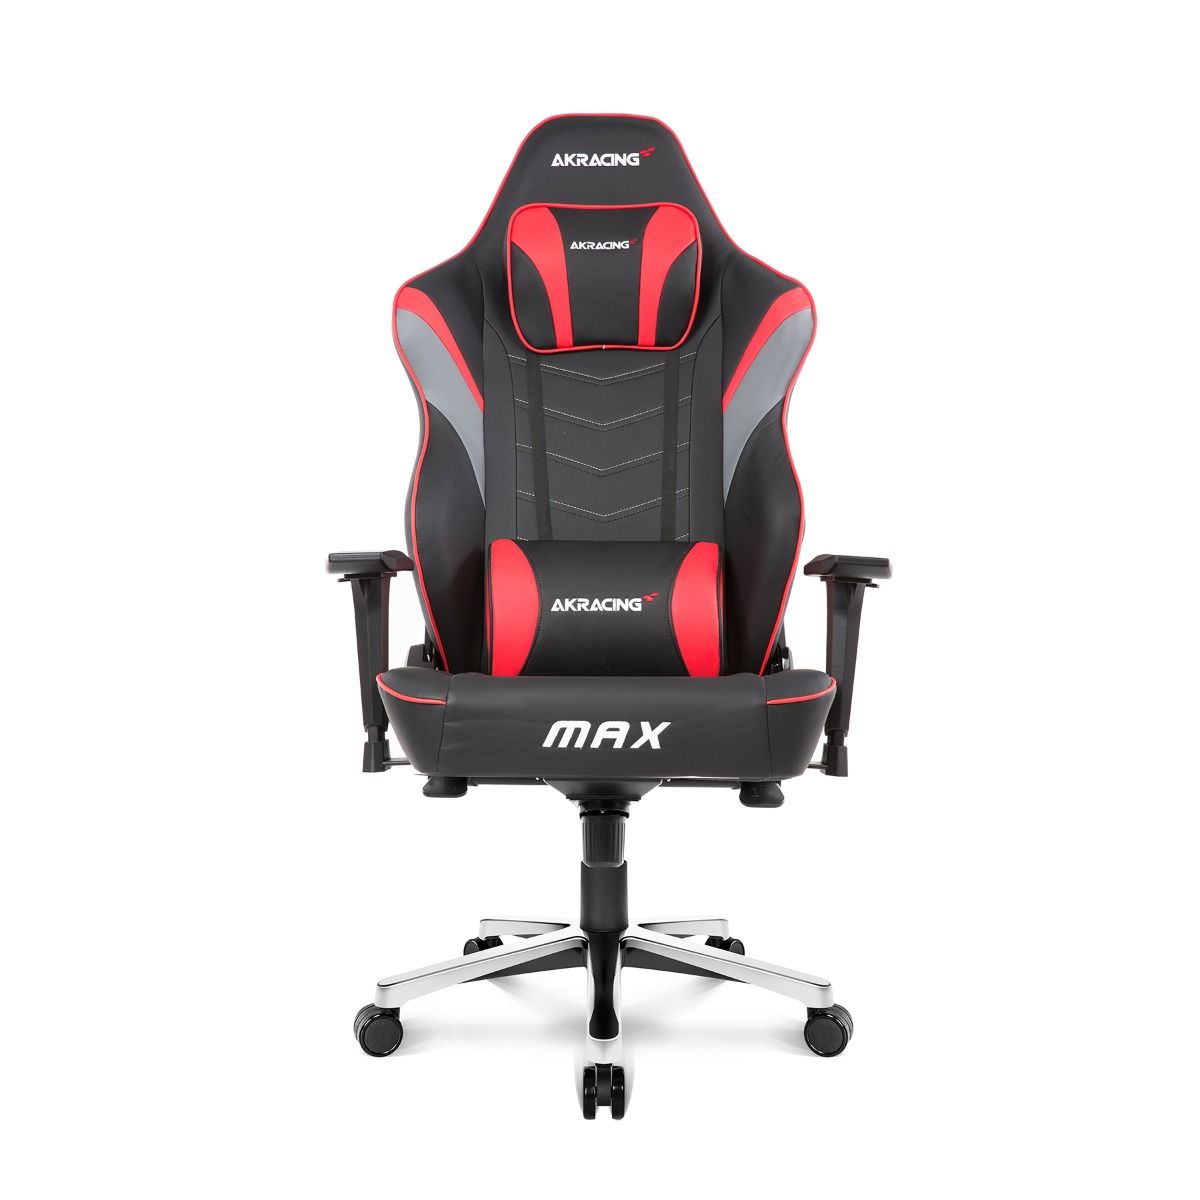 AKRACING MAX Series Gaming Chair Red